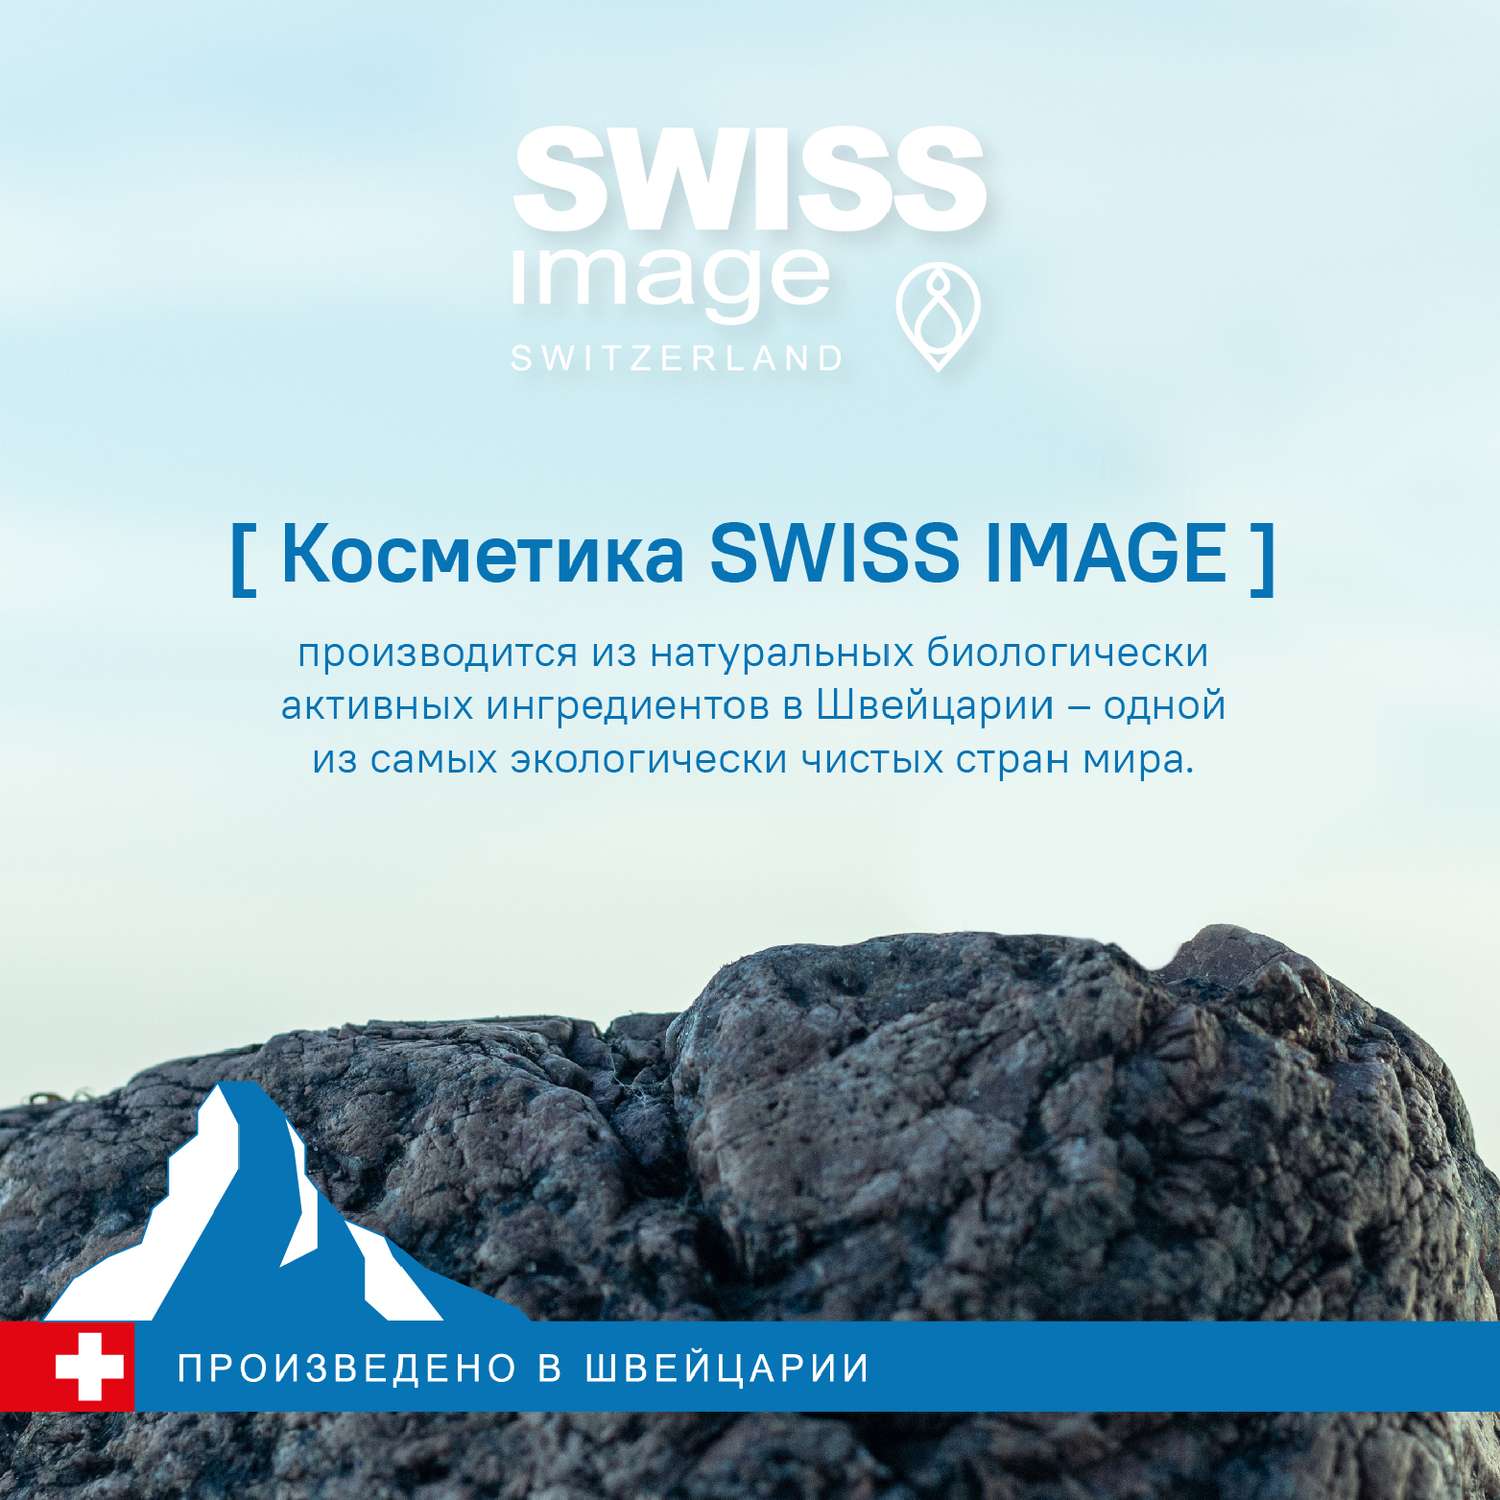 Крем вокруг глаз Swiss image против глубоких морщин 46+ антивозрастной уход 15 мл - фото 10